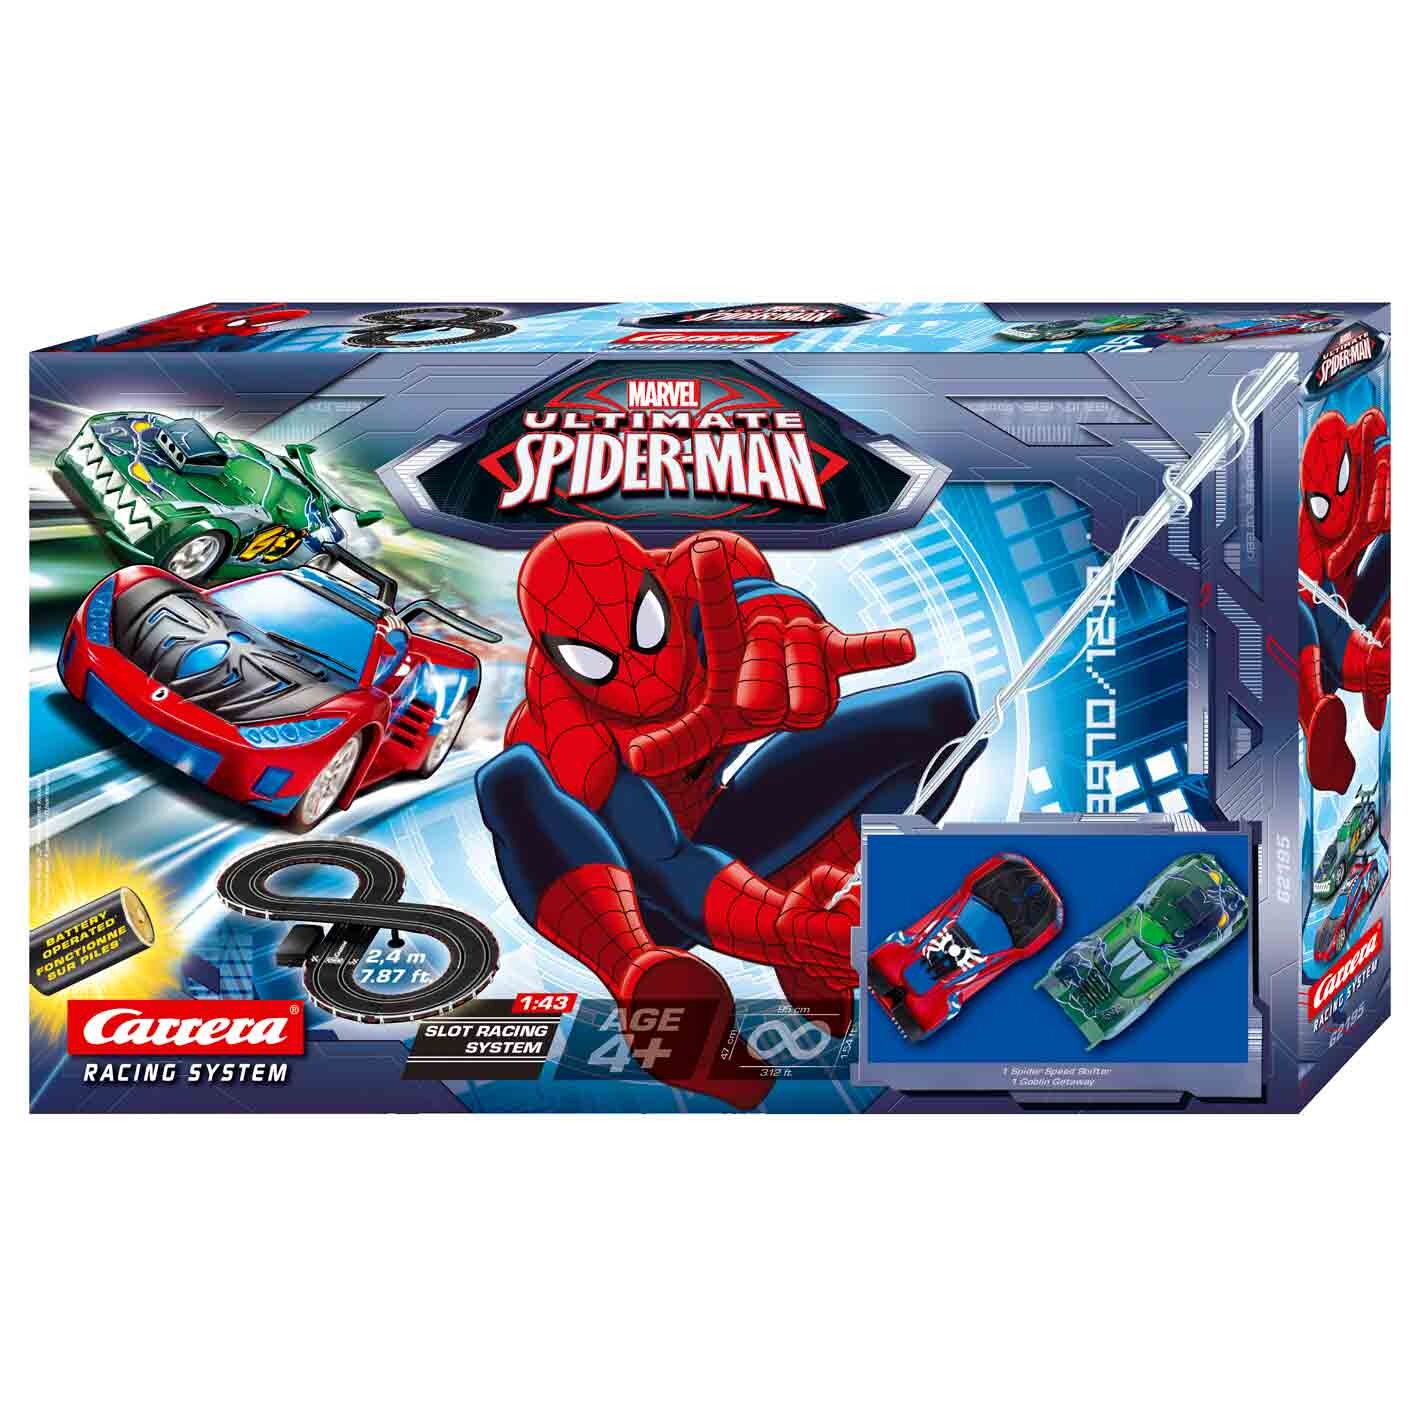 Ultimate spiderman pista carrera battery operated racing system - marvel - spider-man - CARRERA